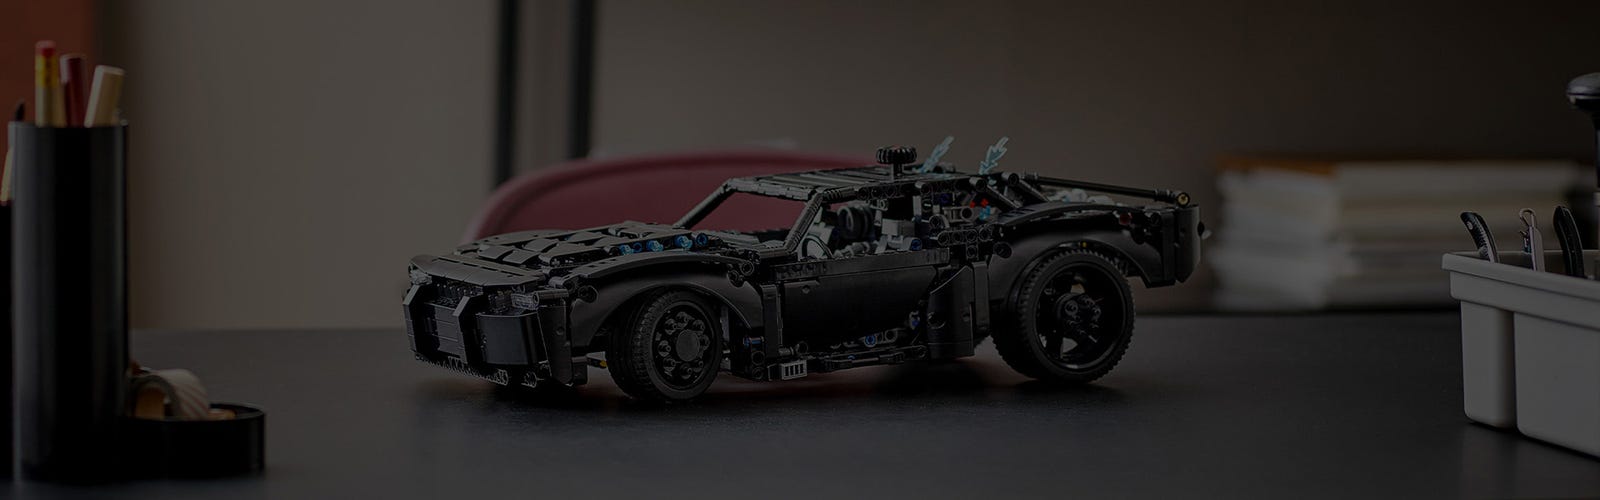 Another Great Batmobile! LEGO Technic The Batman Batmobile 42127 Review! 